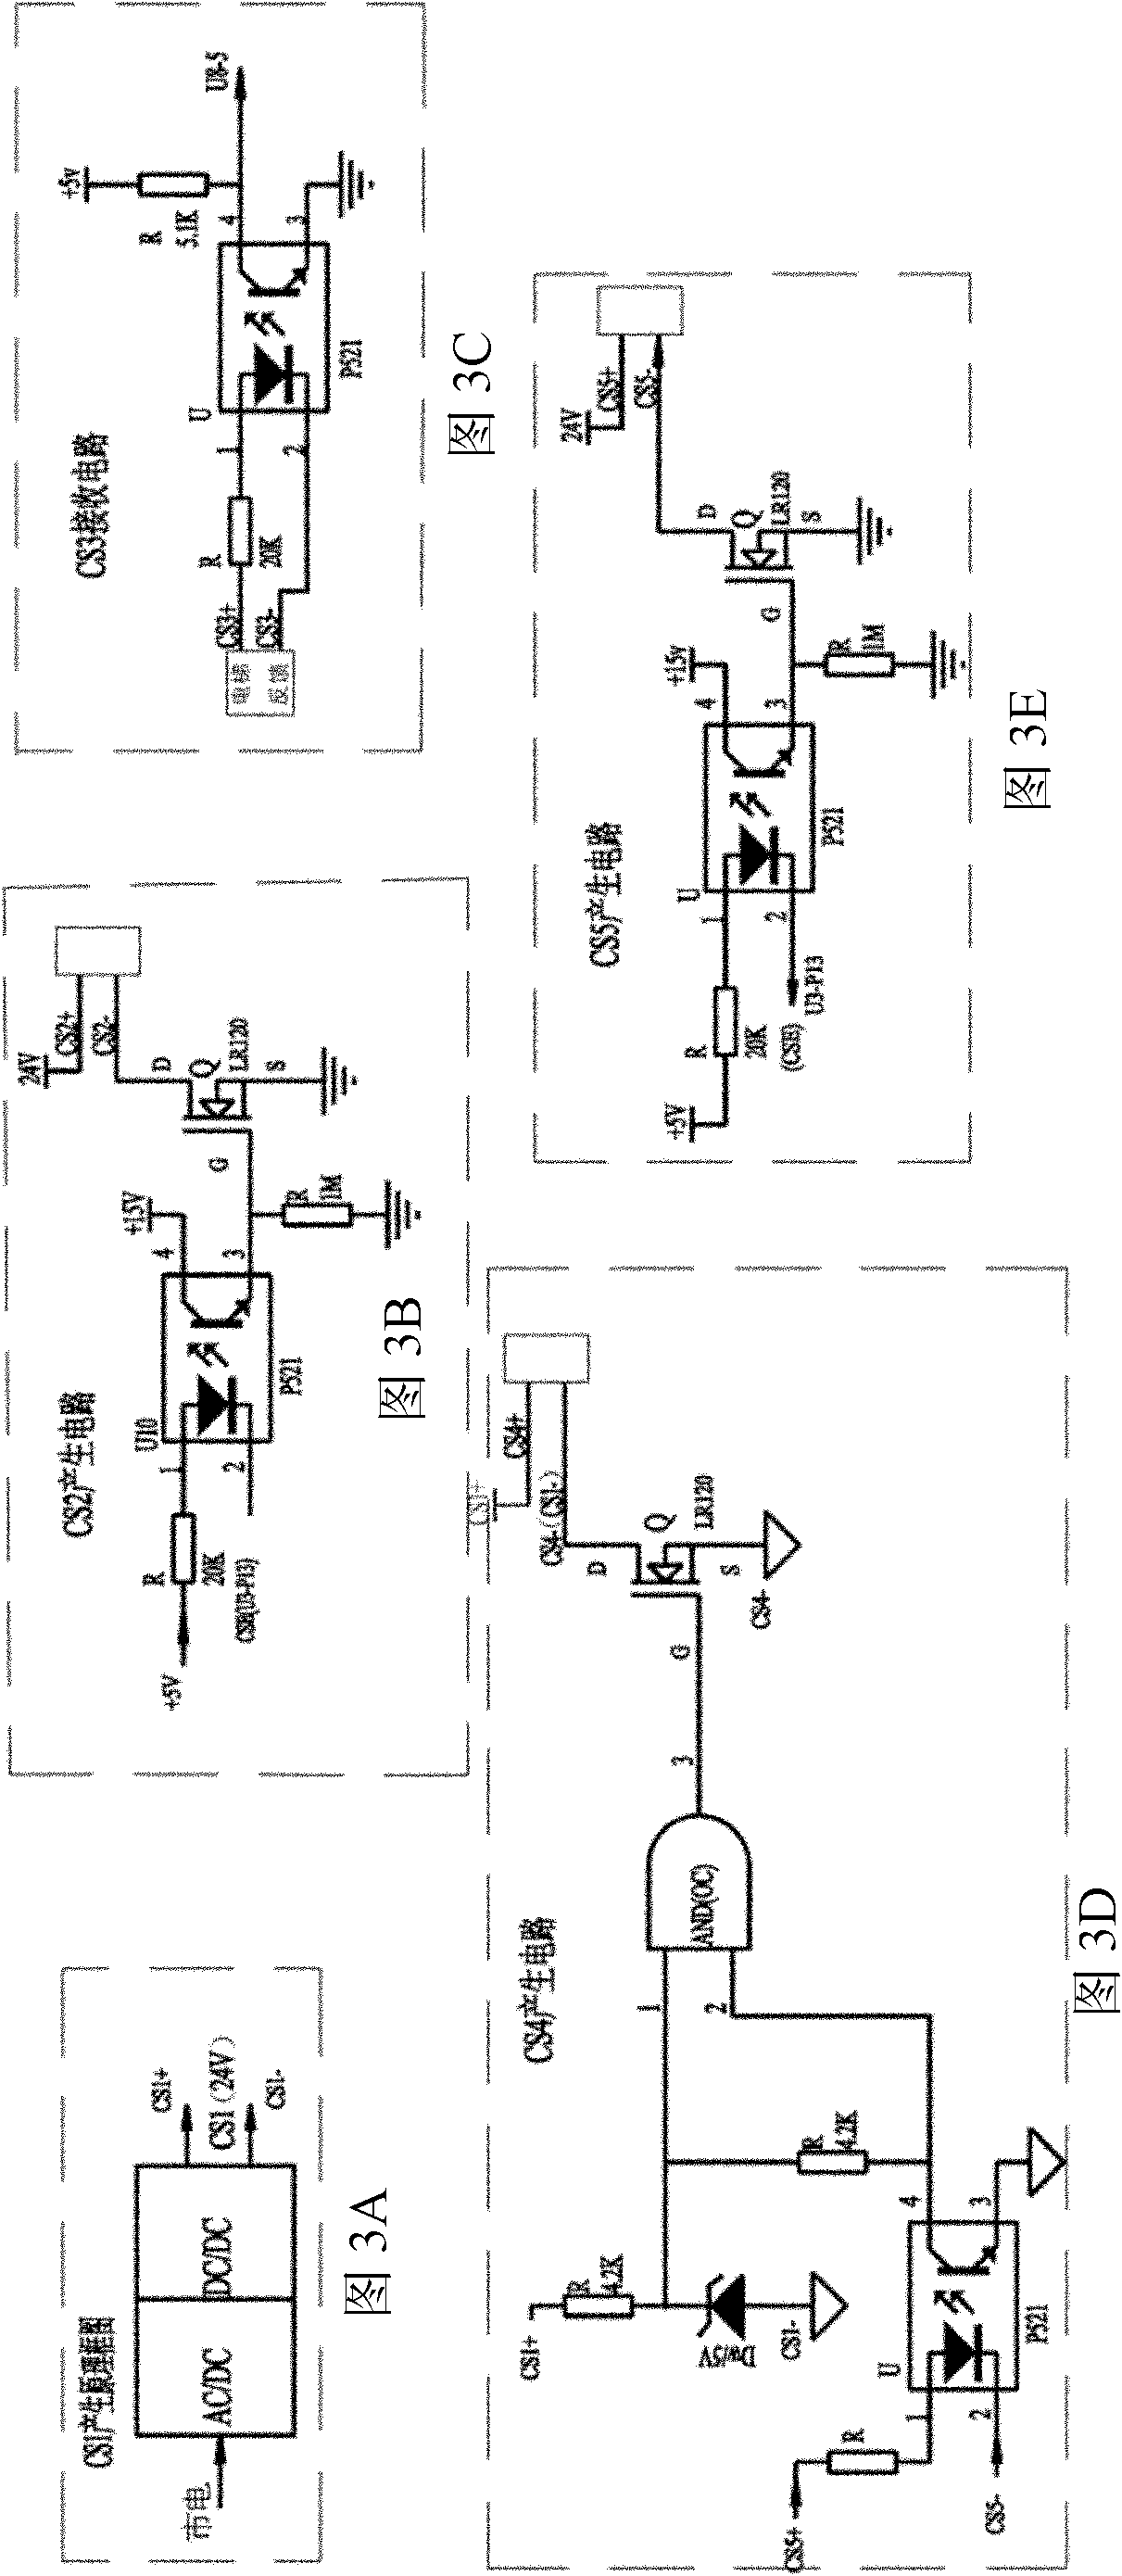 Elevator power supply device